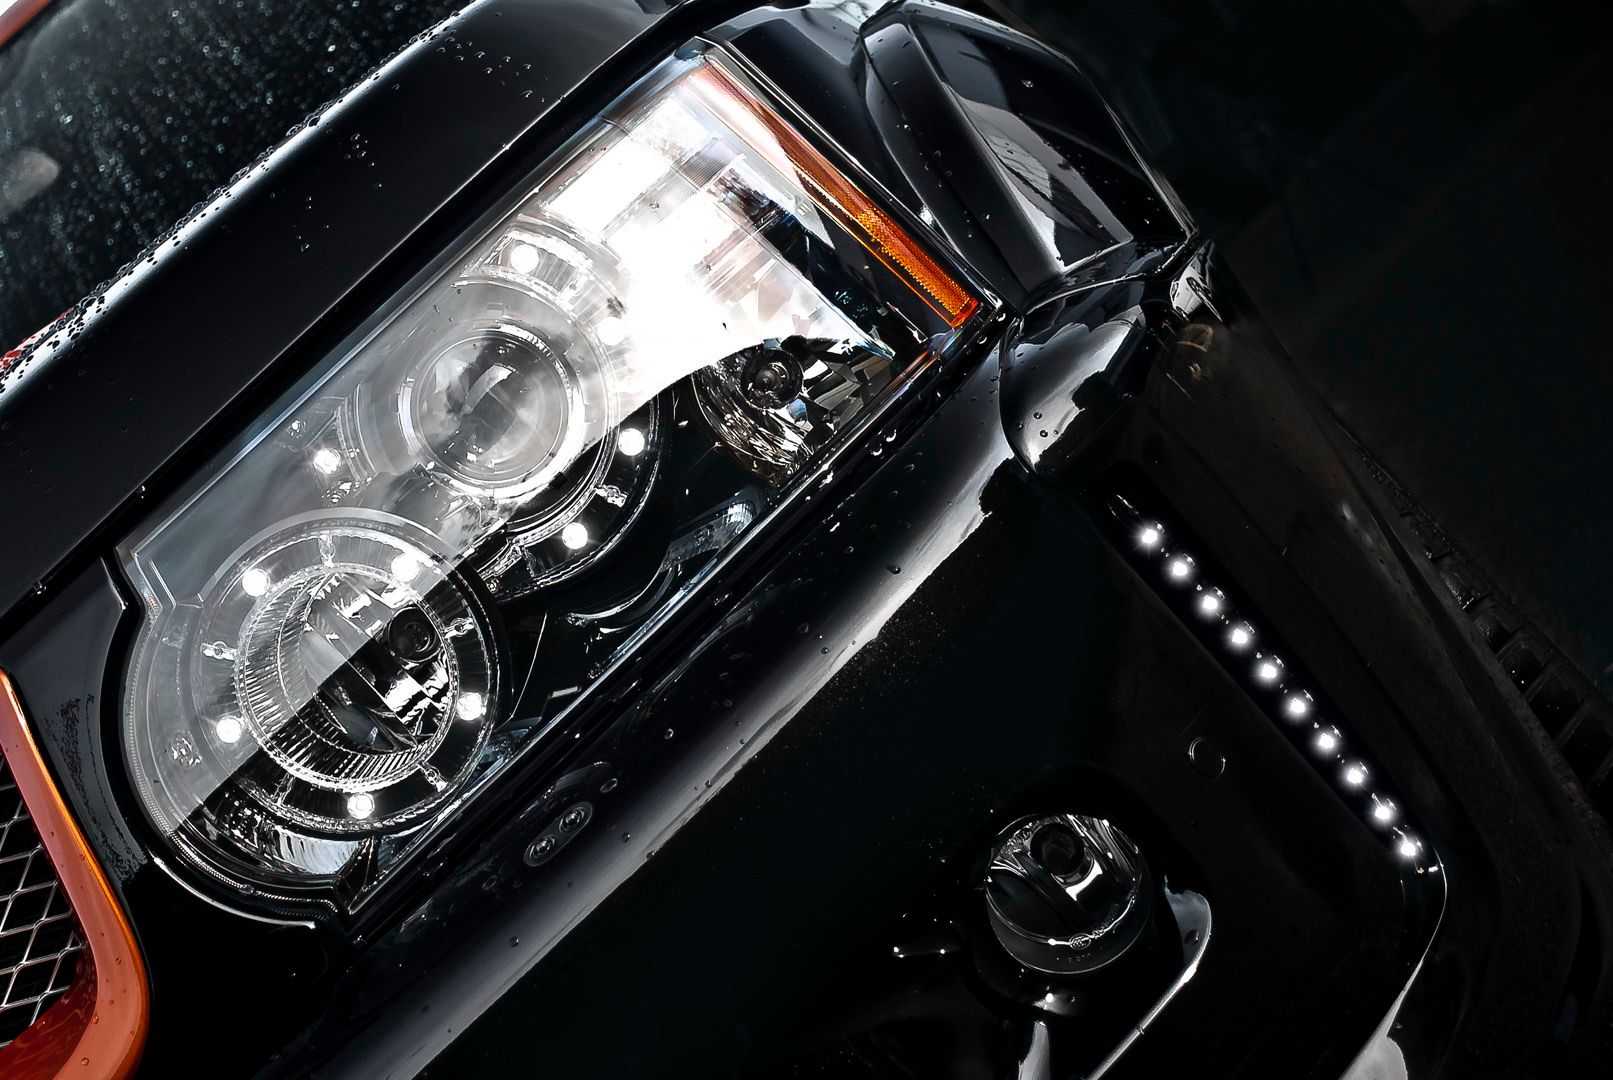 2012 Range Rover RS300 Vesuvius Edition by Kahn Design